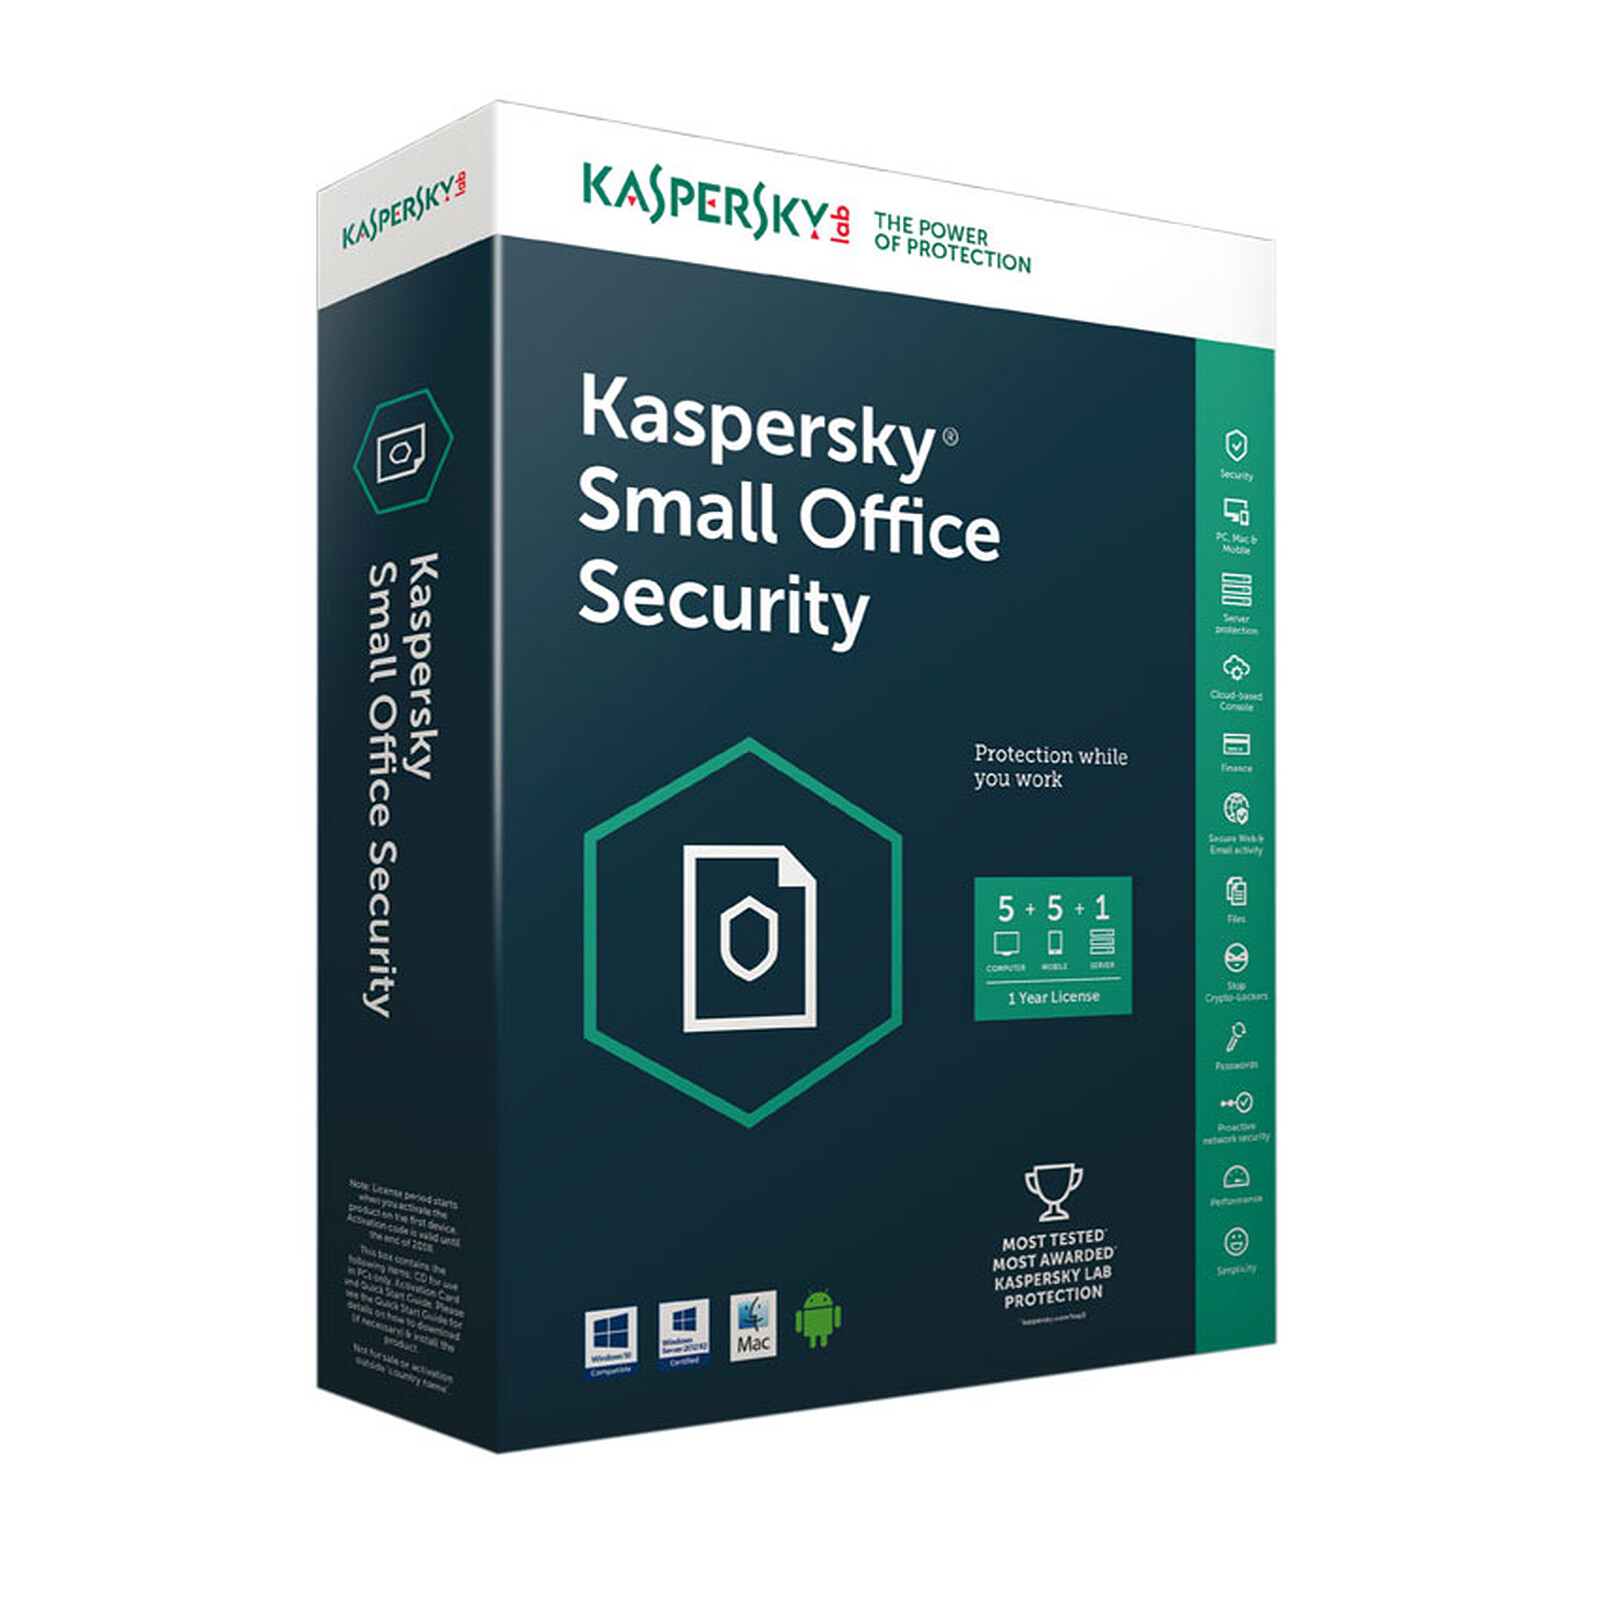 Kaspersky Small Office Security 5 - Software seguridad Kaspersky en LDLC |  ¡Musericordia!